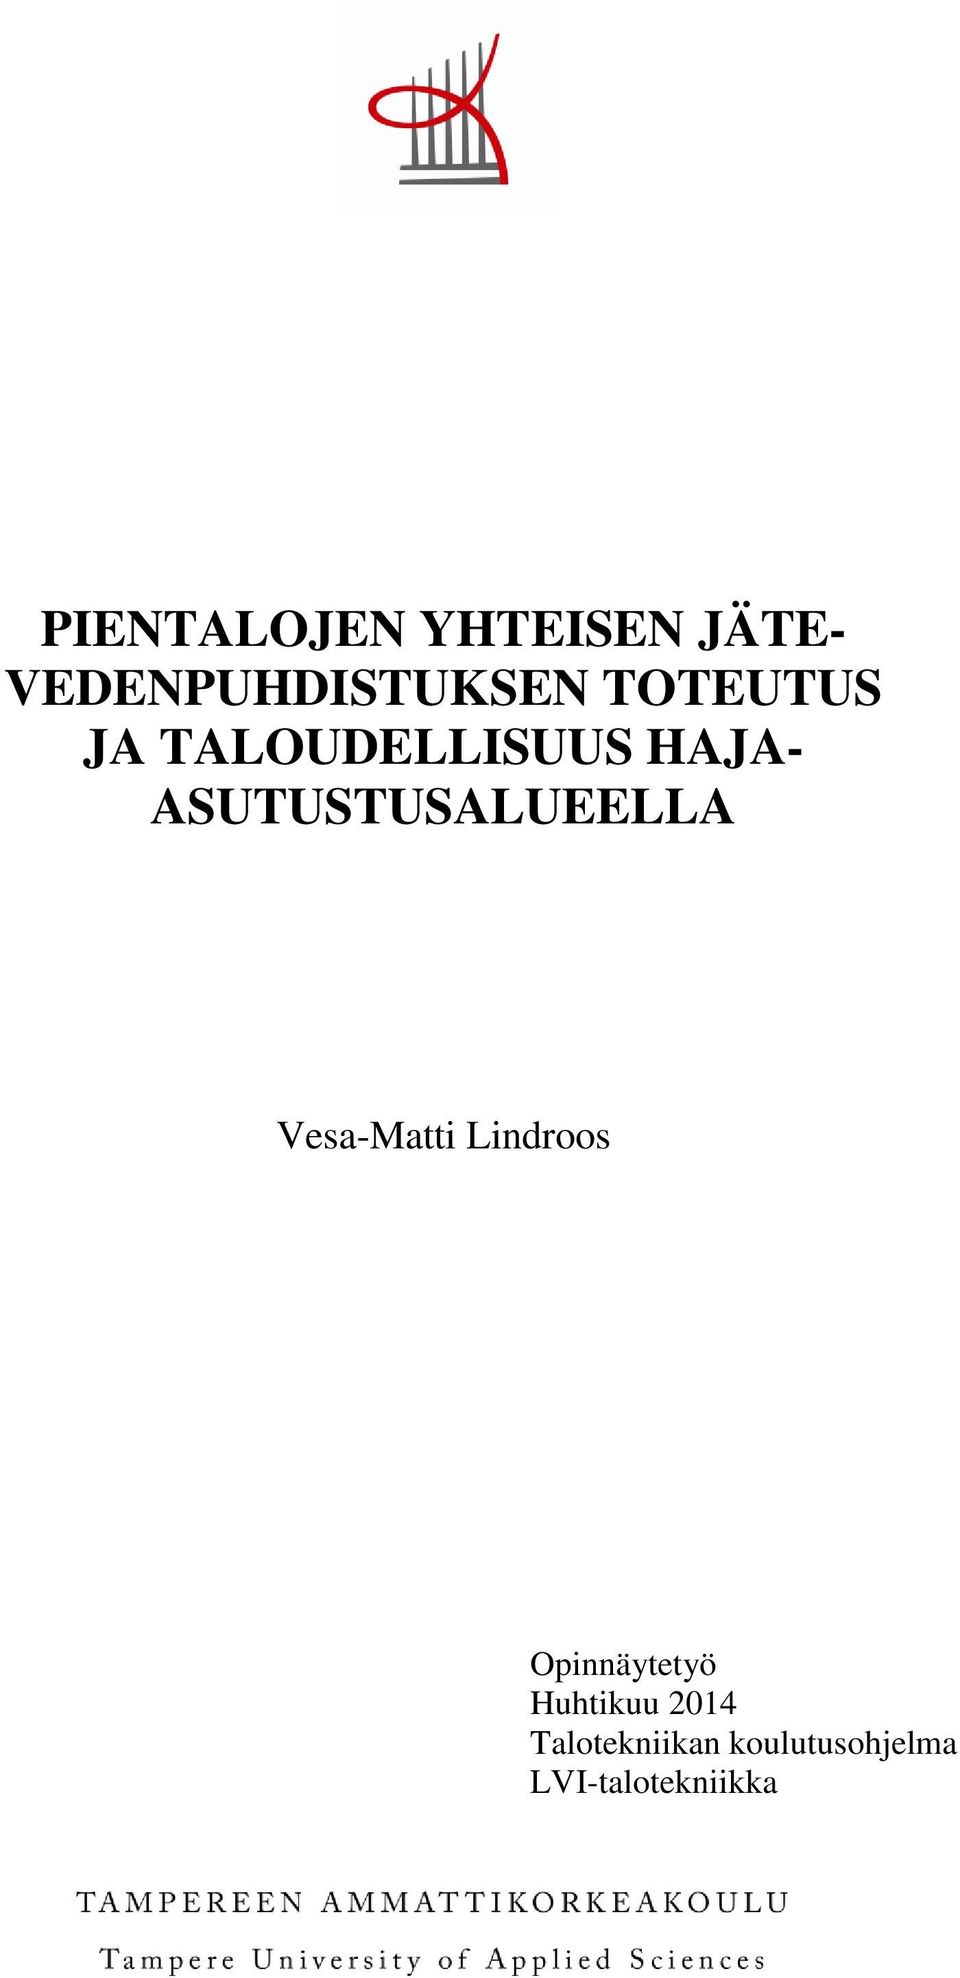 ASUTUSTUSALUEELLA Vesa-Matti Lindroos